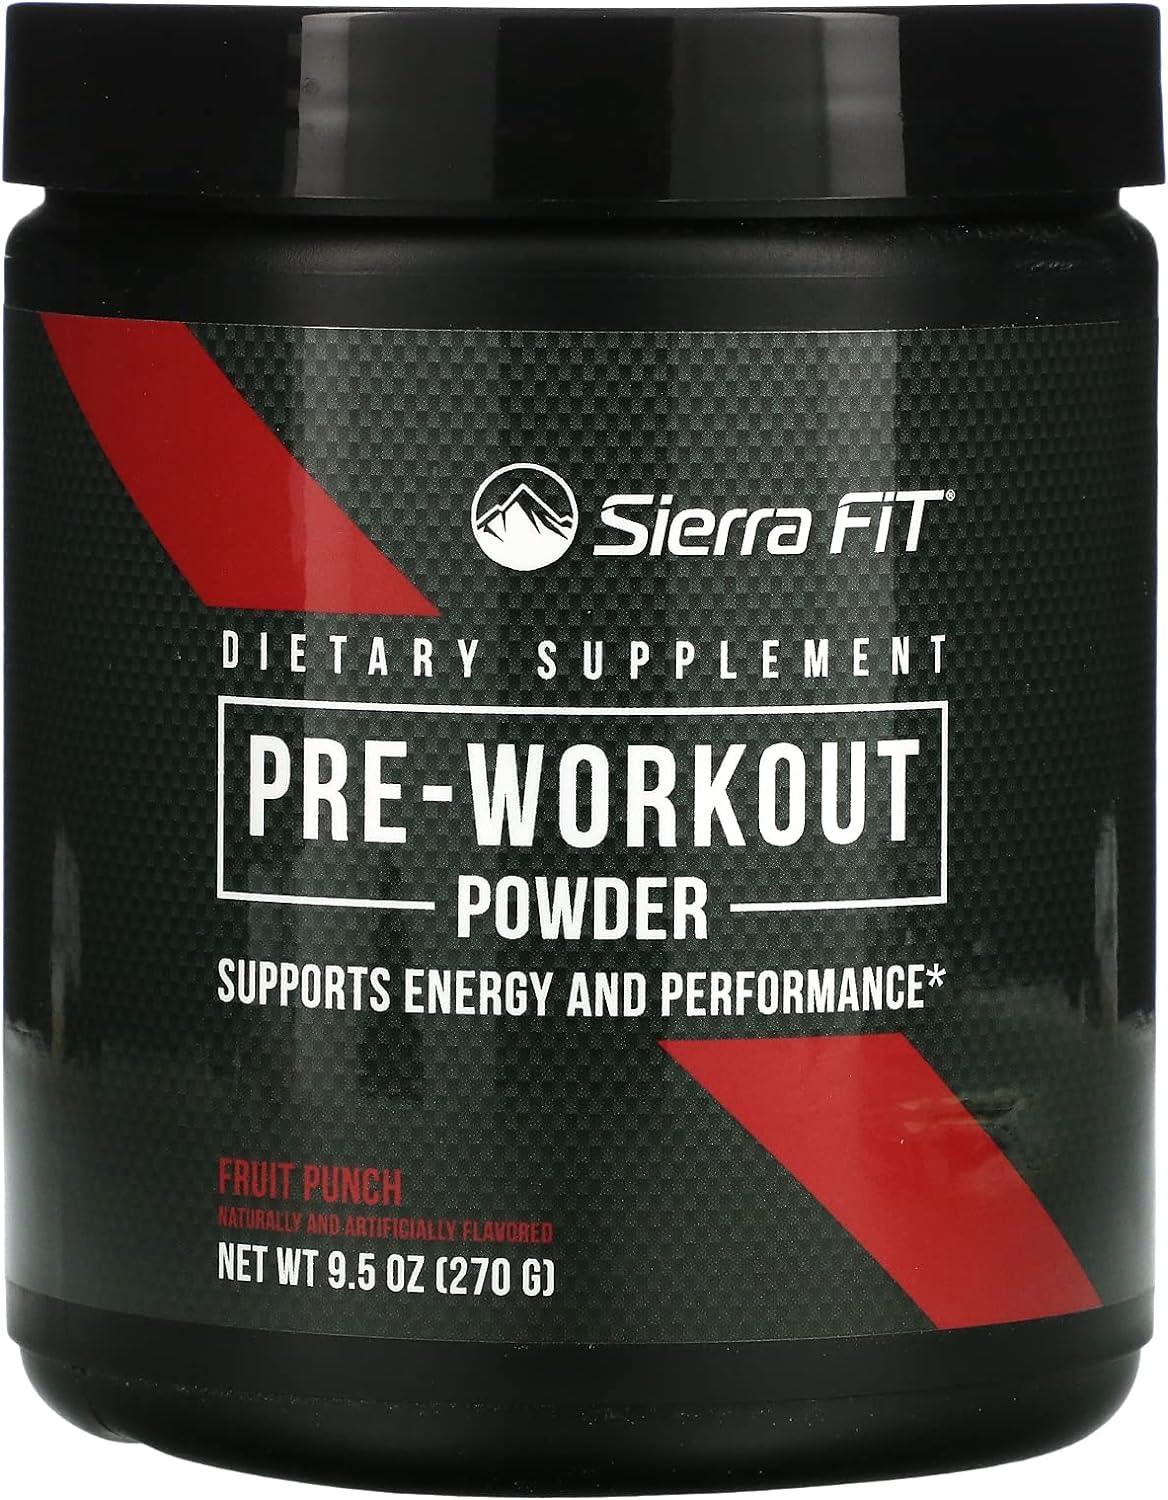 Sierra Fit Pre-Workout Powder, Fruit Punch, 9.5 oz (270 g)